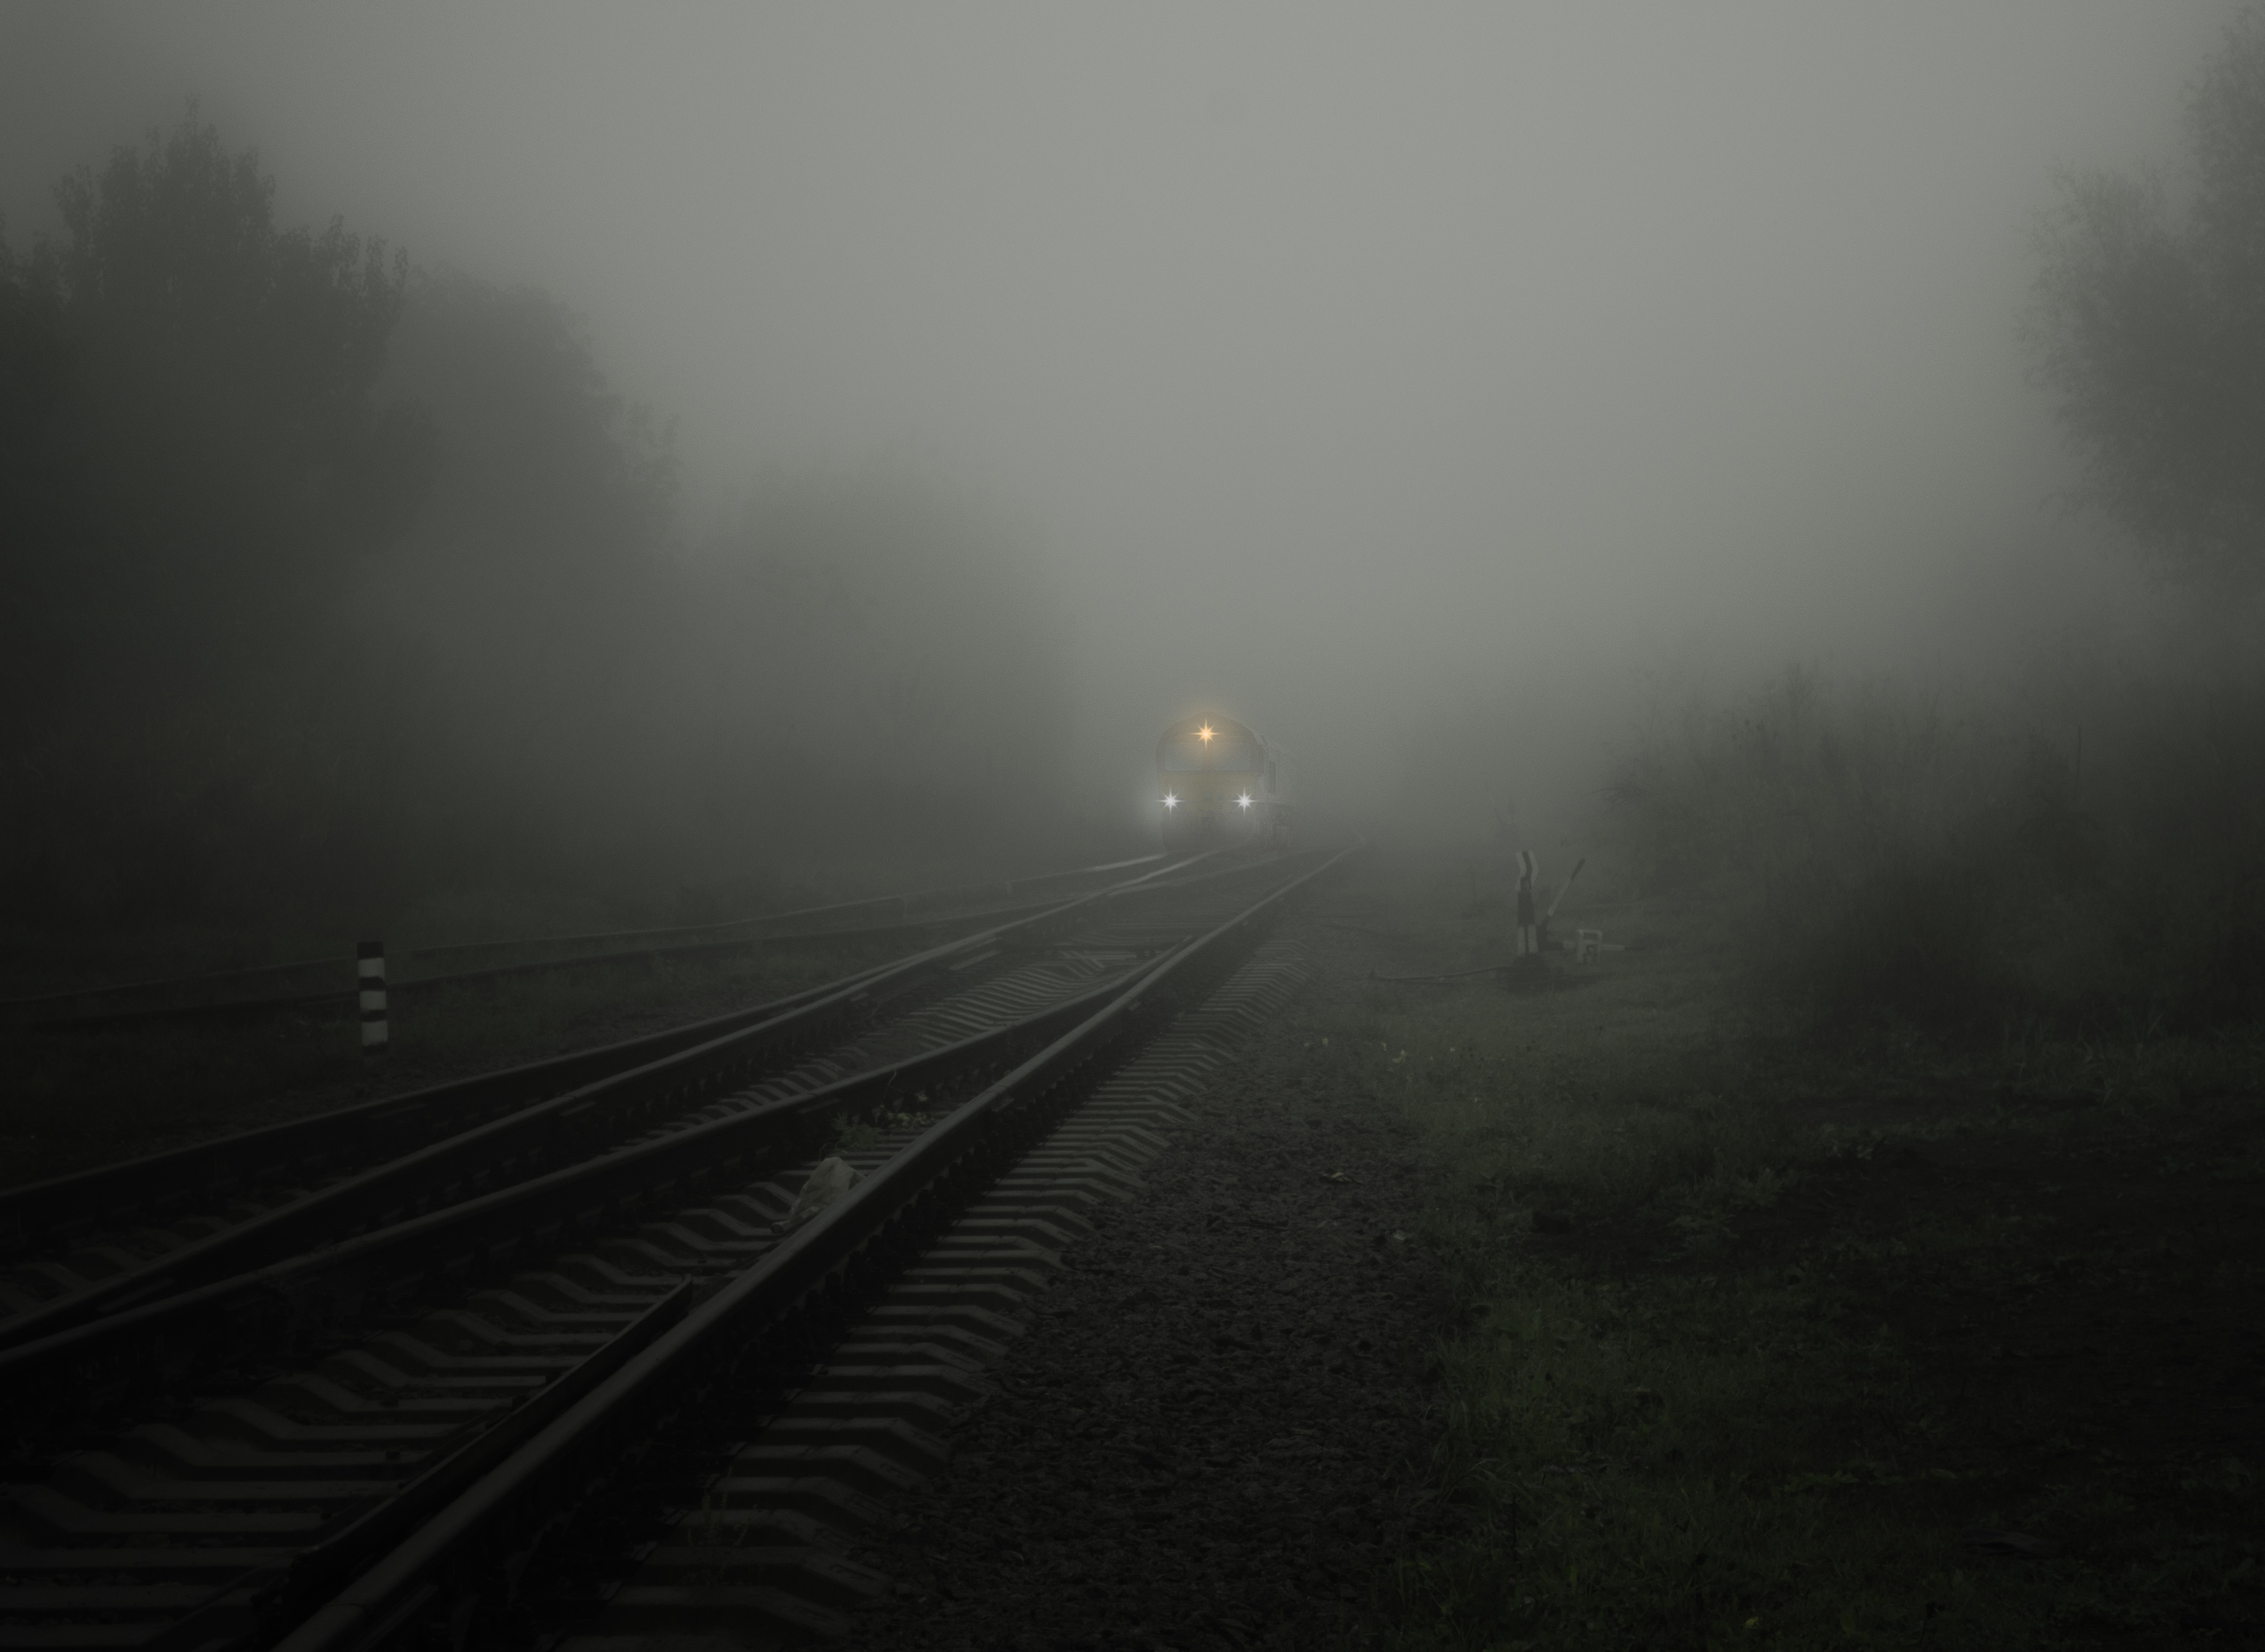 Train Lights on a Foggy Day